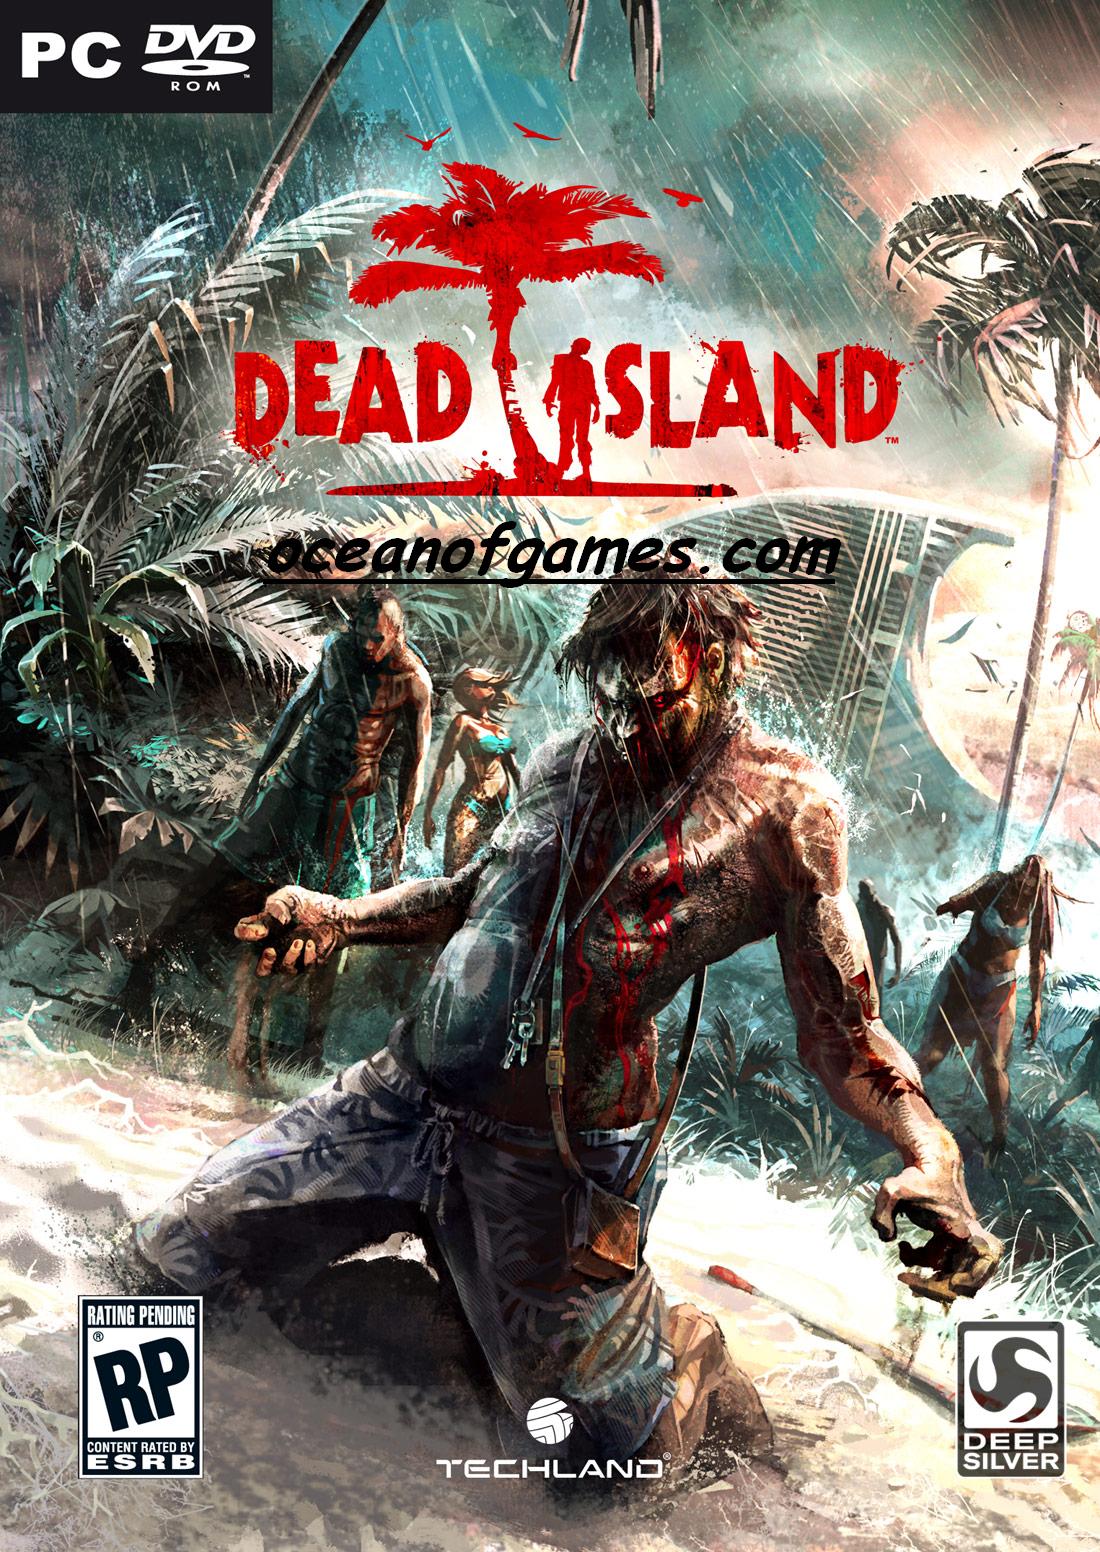 Dead island download windows 10 download windows 10 media creation